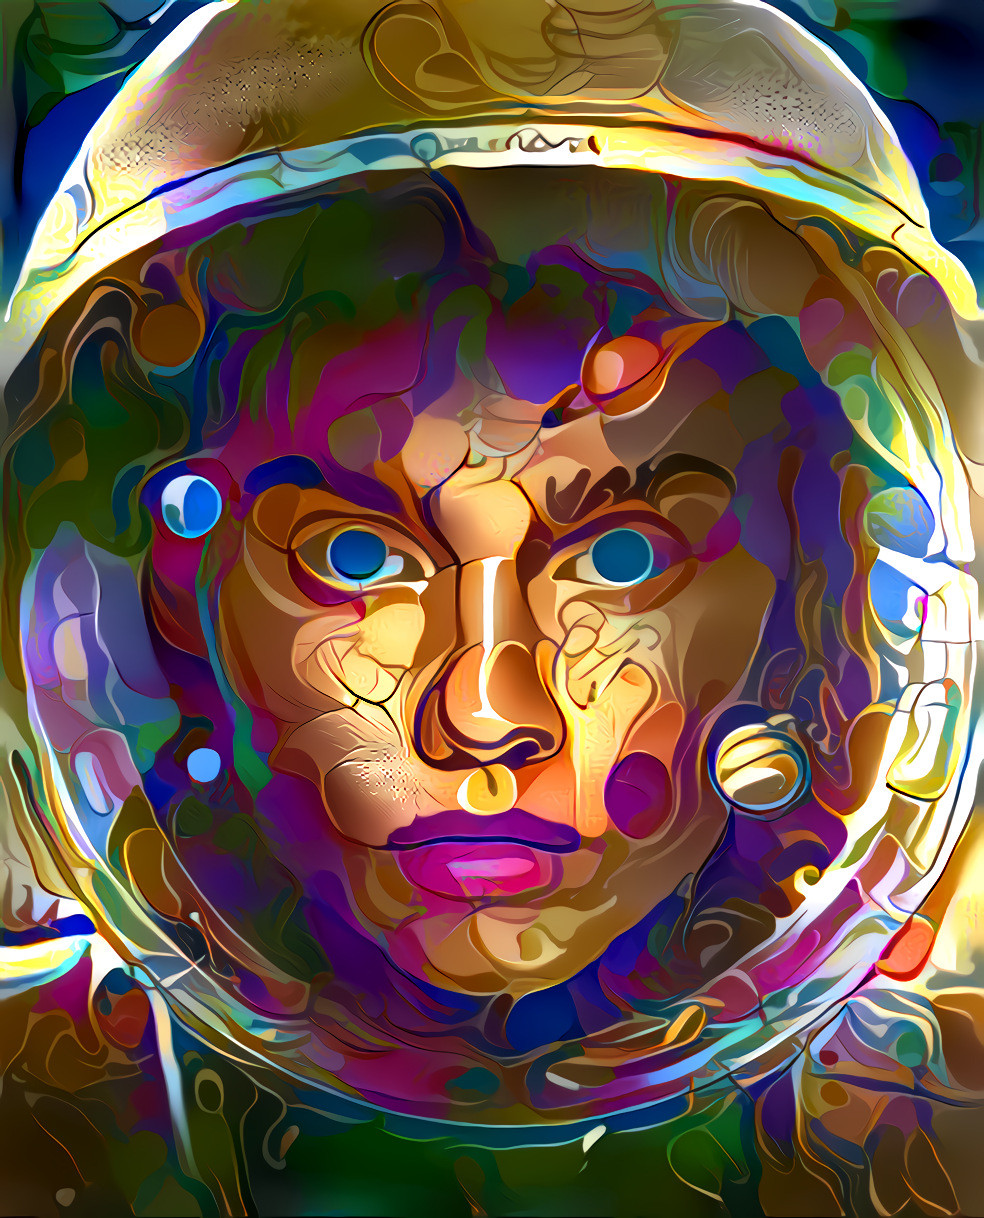 Astronaut Girl